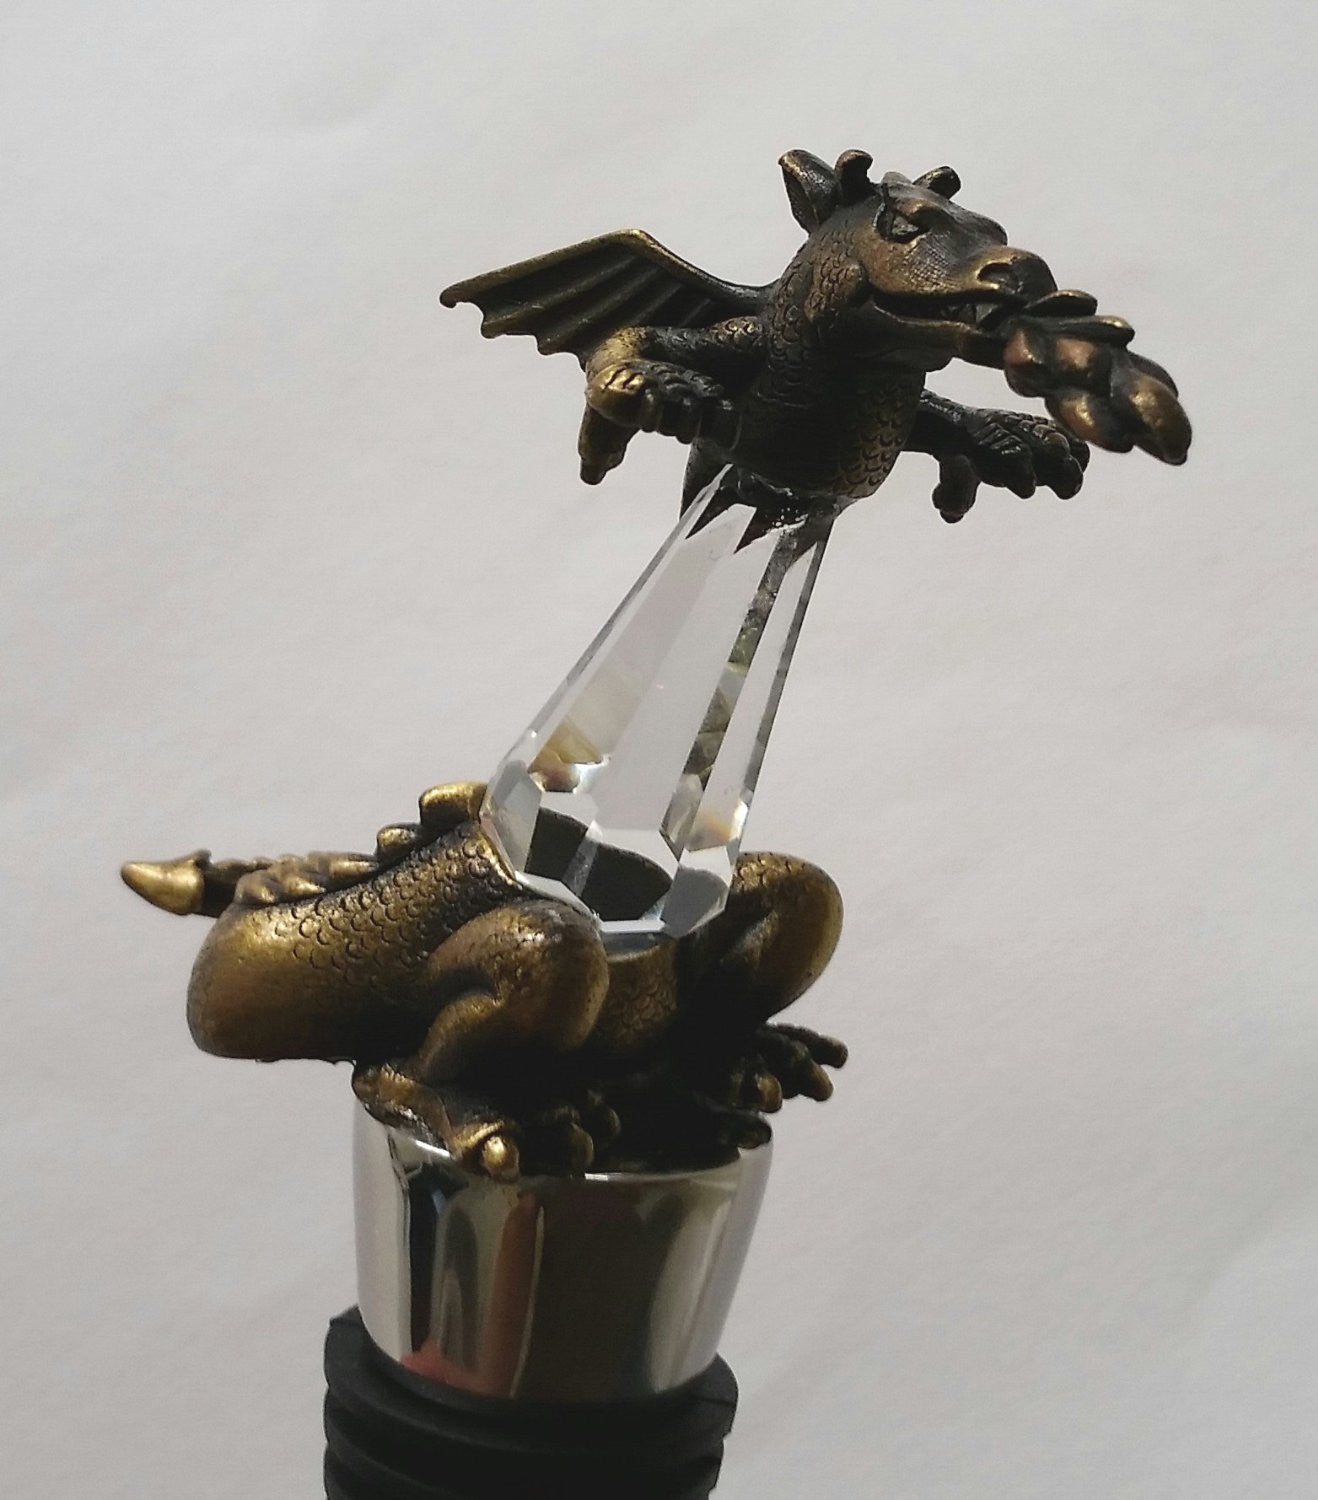 Dragon Wine Stopper - Crystal Wine Stopper Handcrafted Using Swarovski Crystal